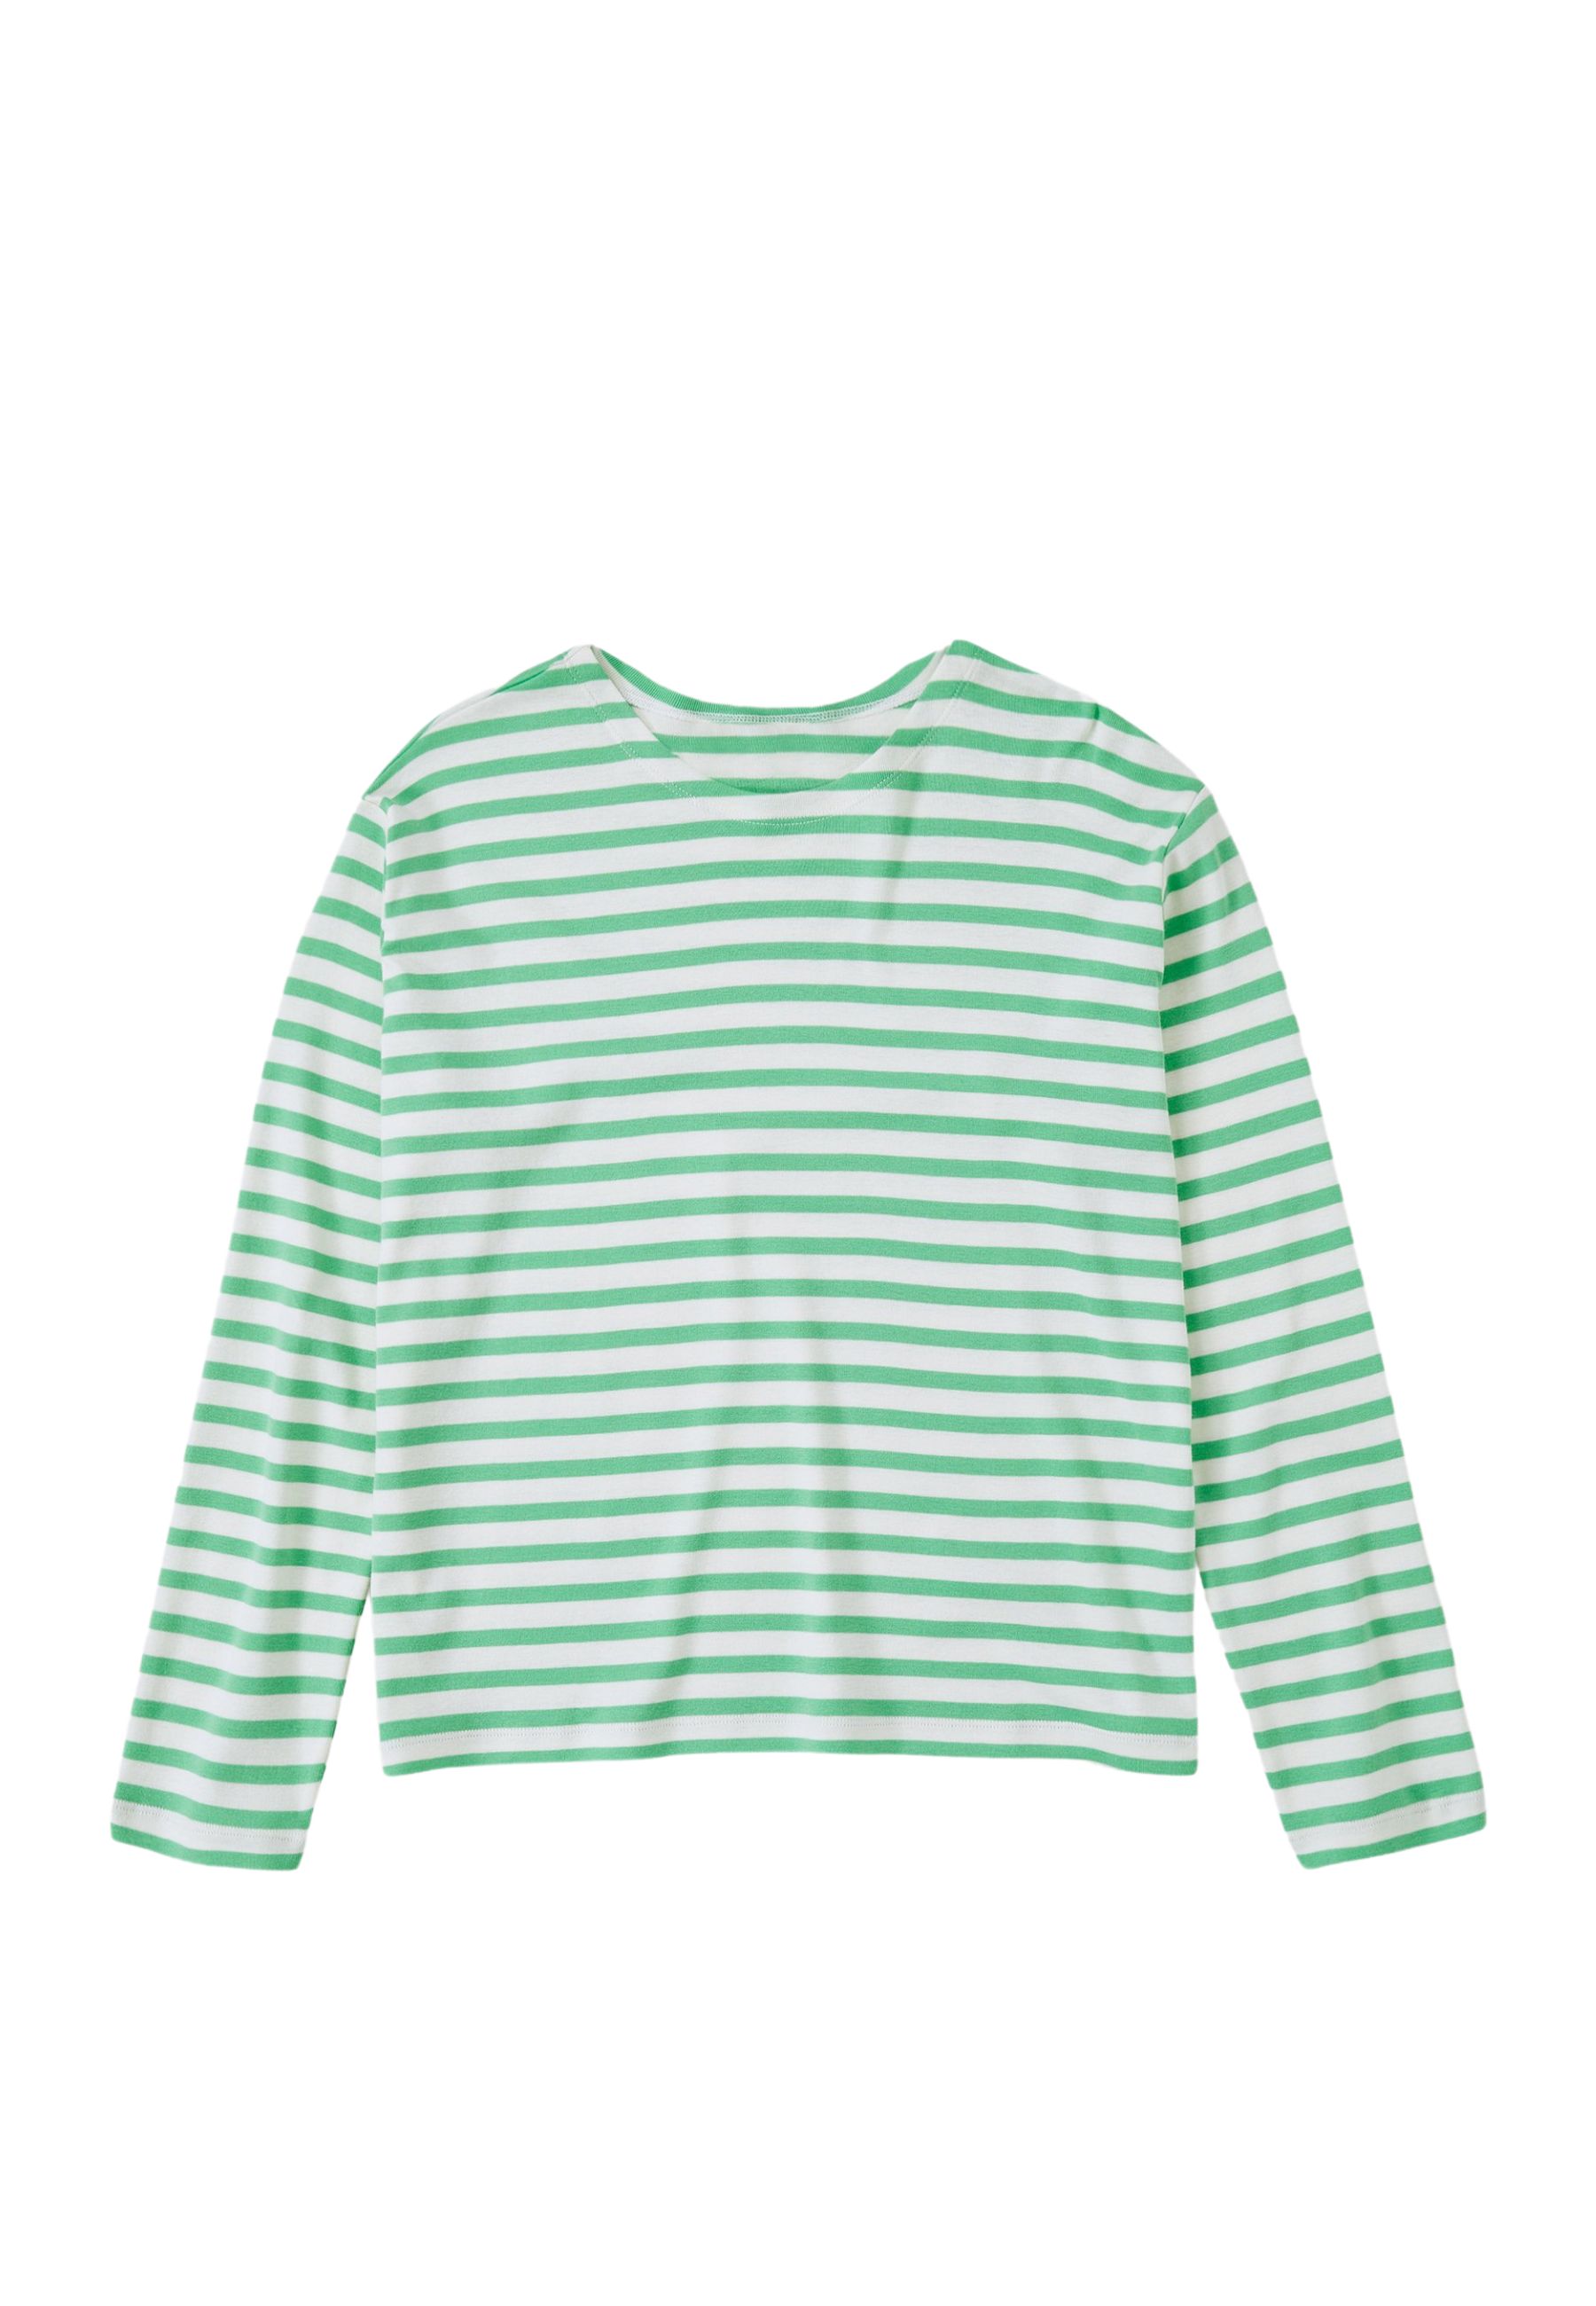 Closed Shirt Groen Katoen maat S longsleeves groen